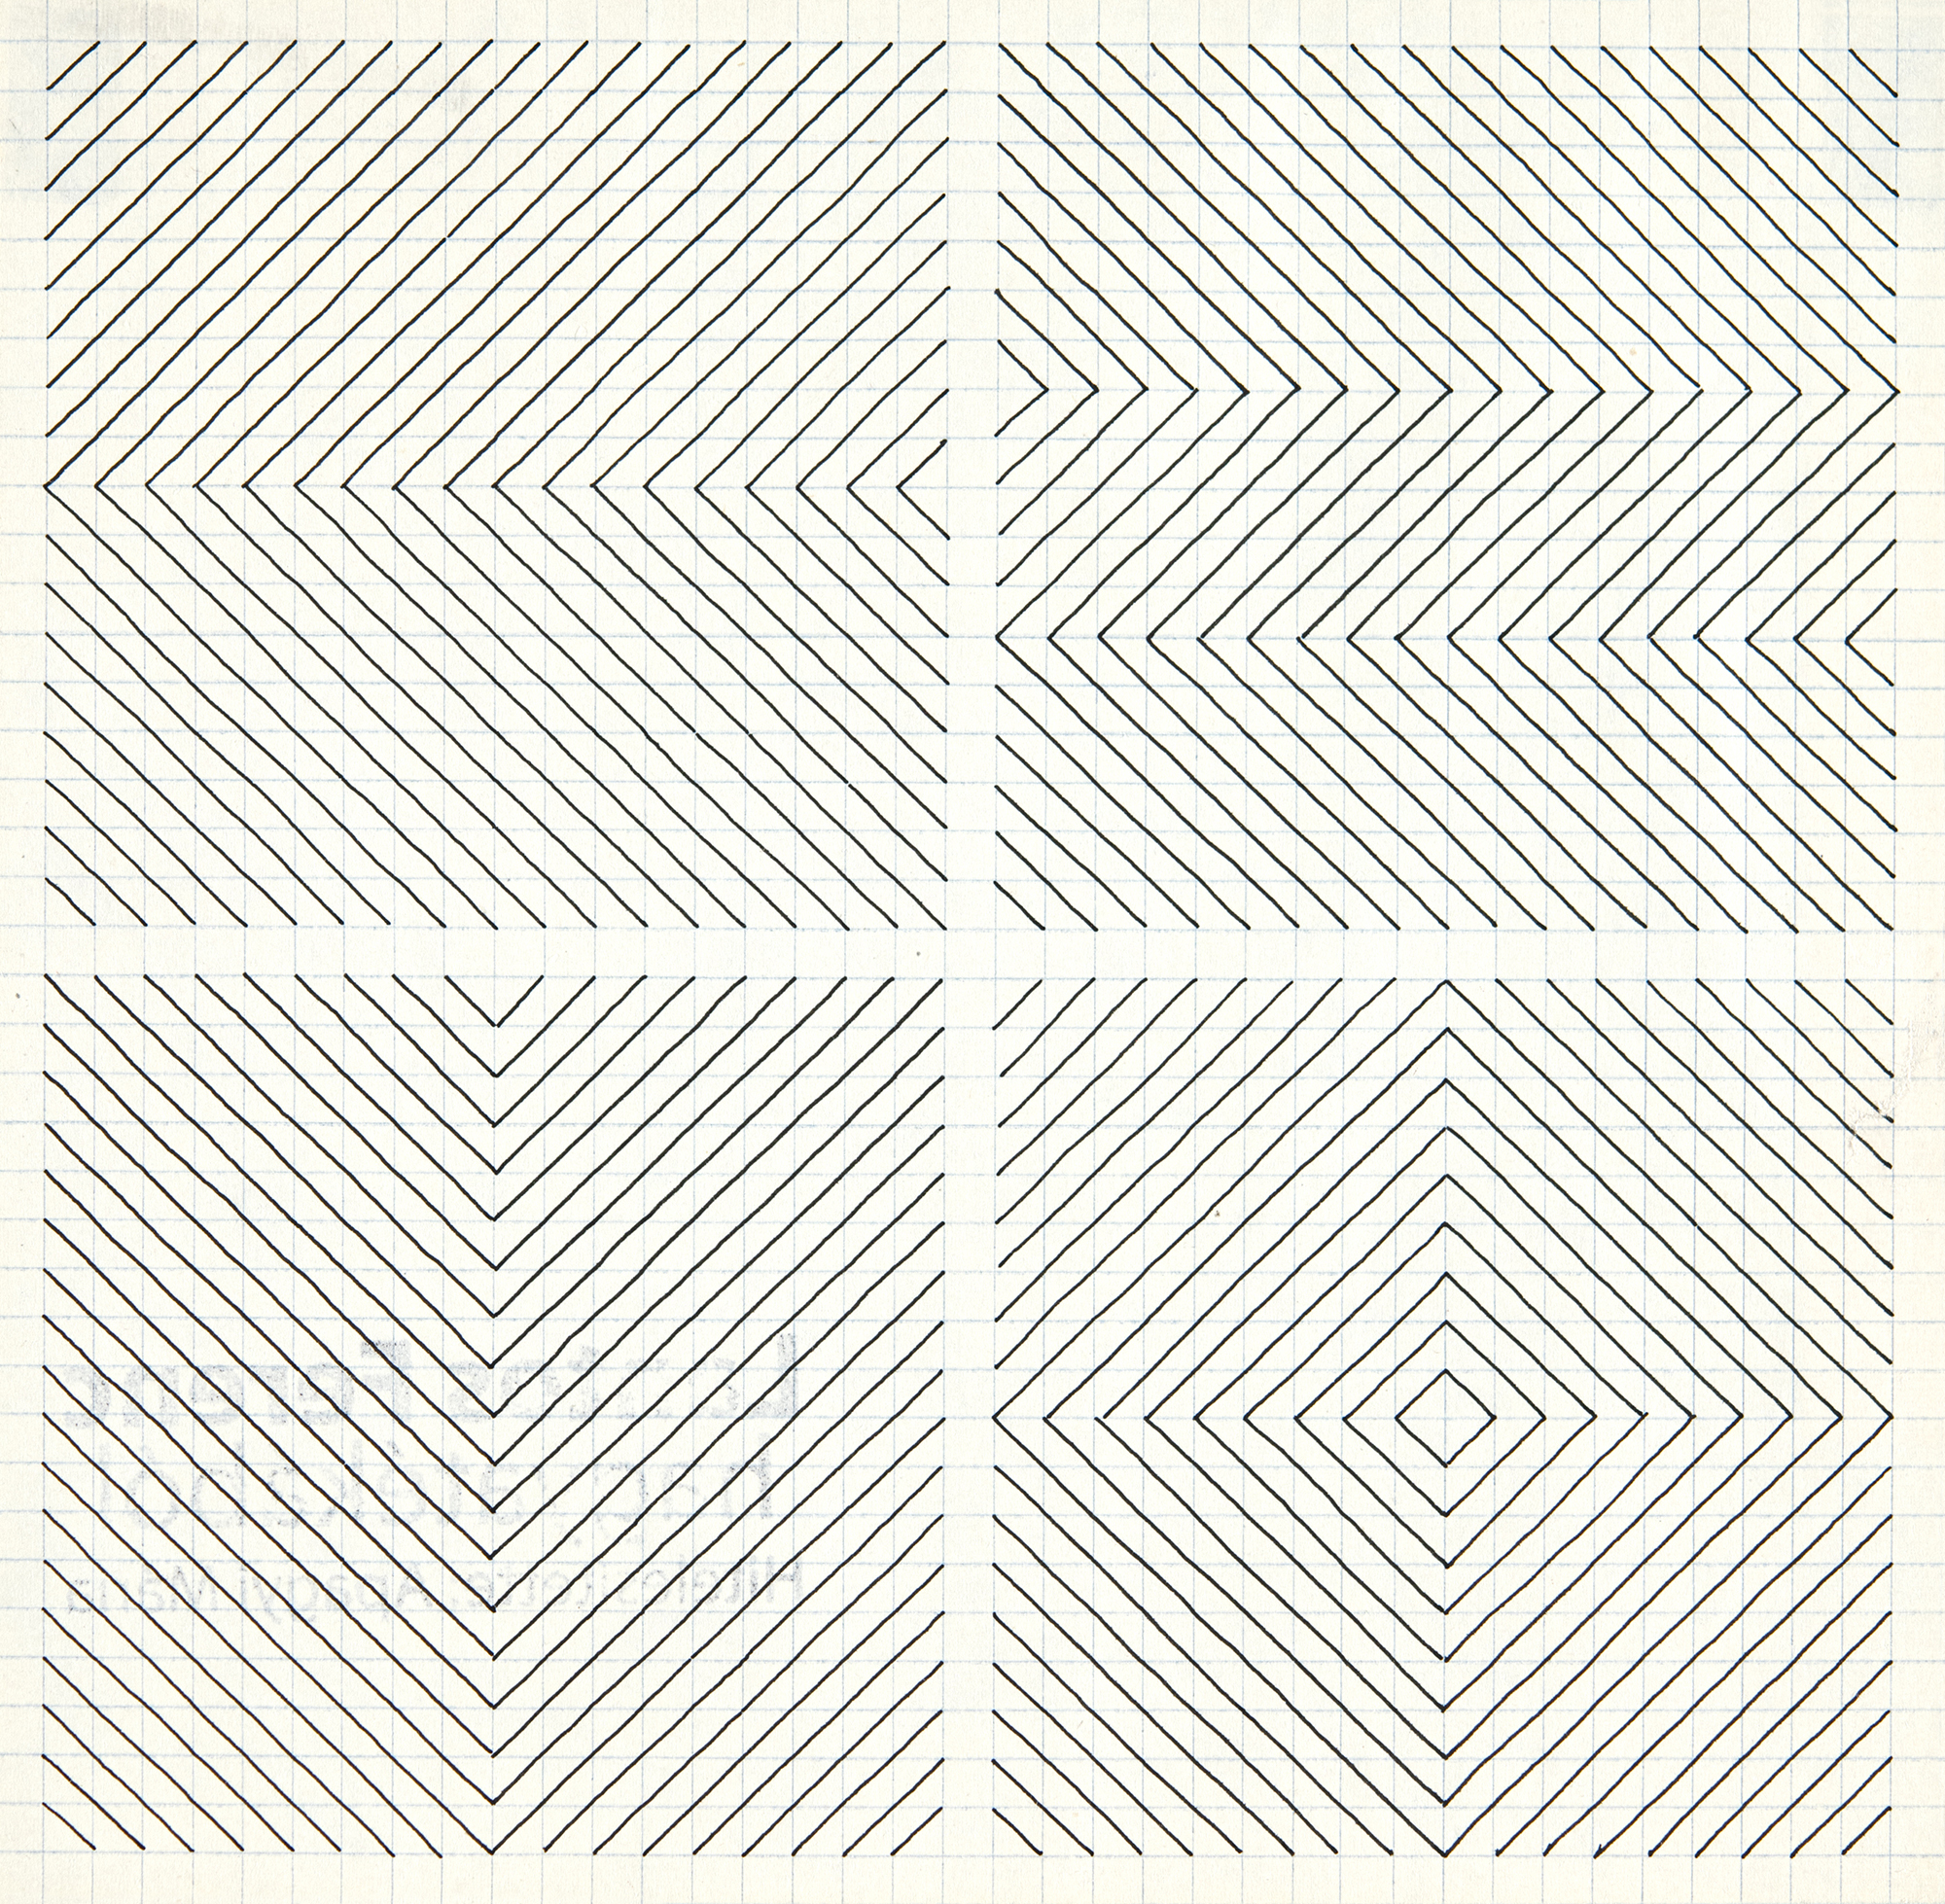 Lantos Ferenc (1929-2014) Geometrical Composition